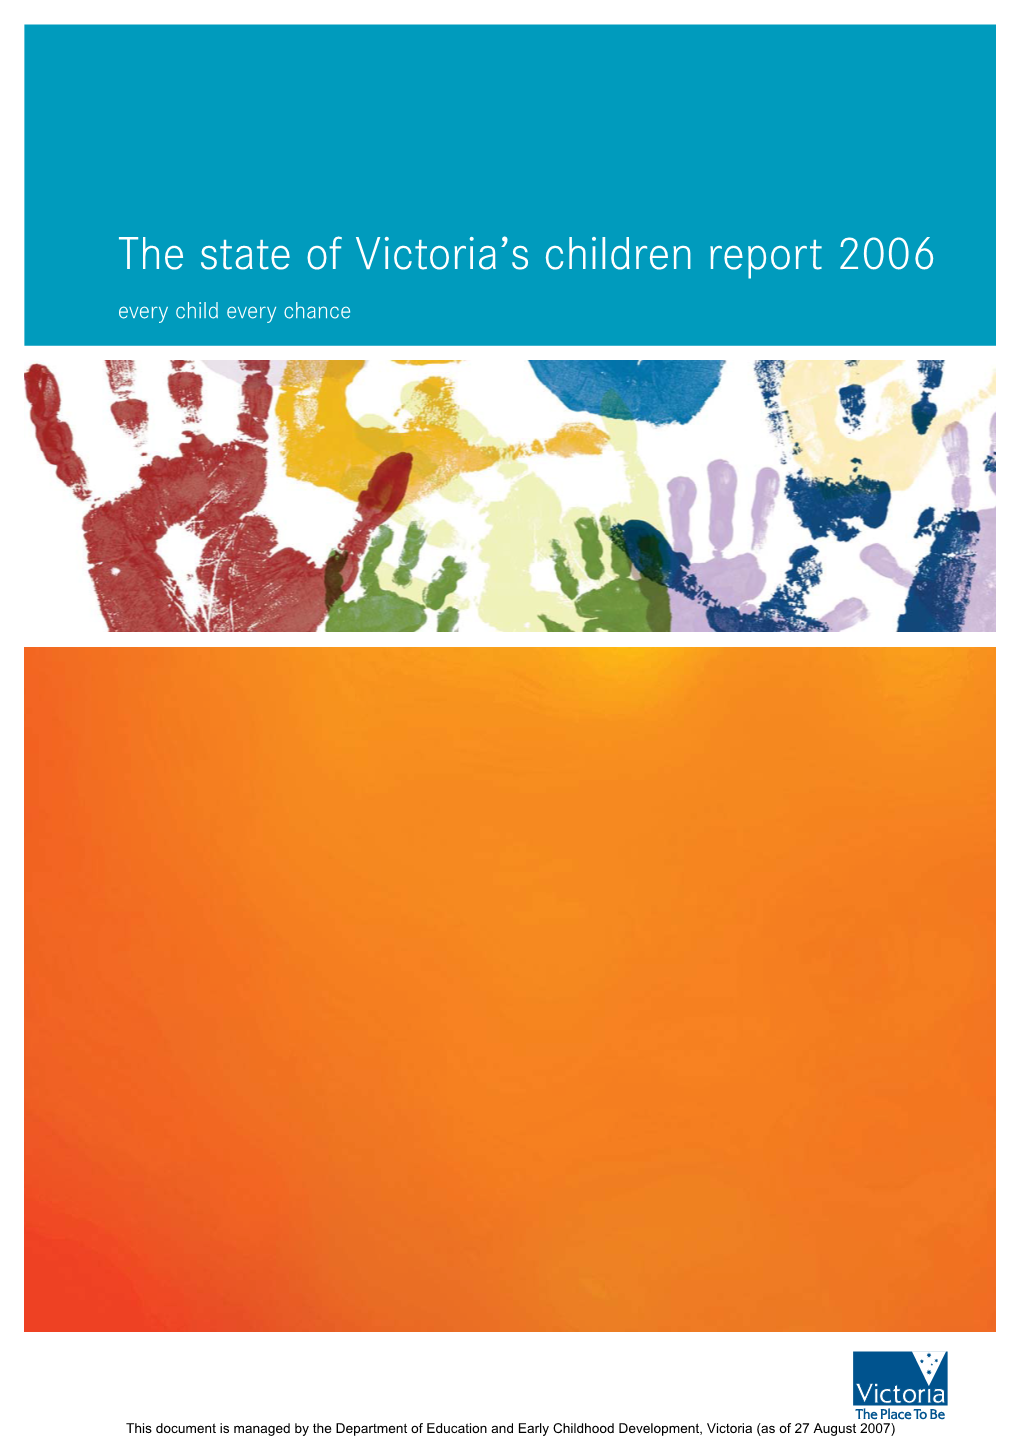 The State of Victoria's Children Report 2006